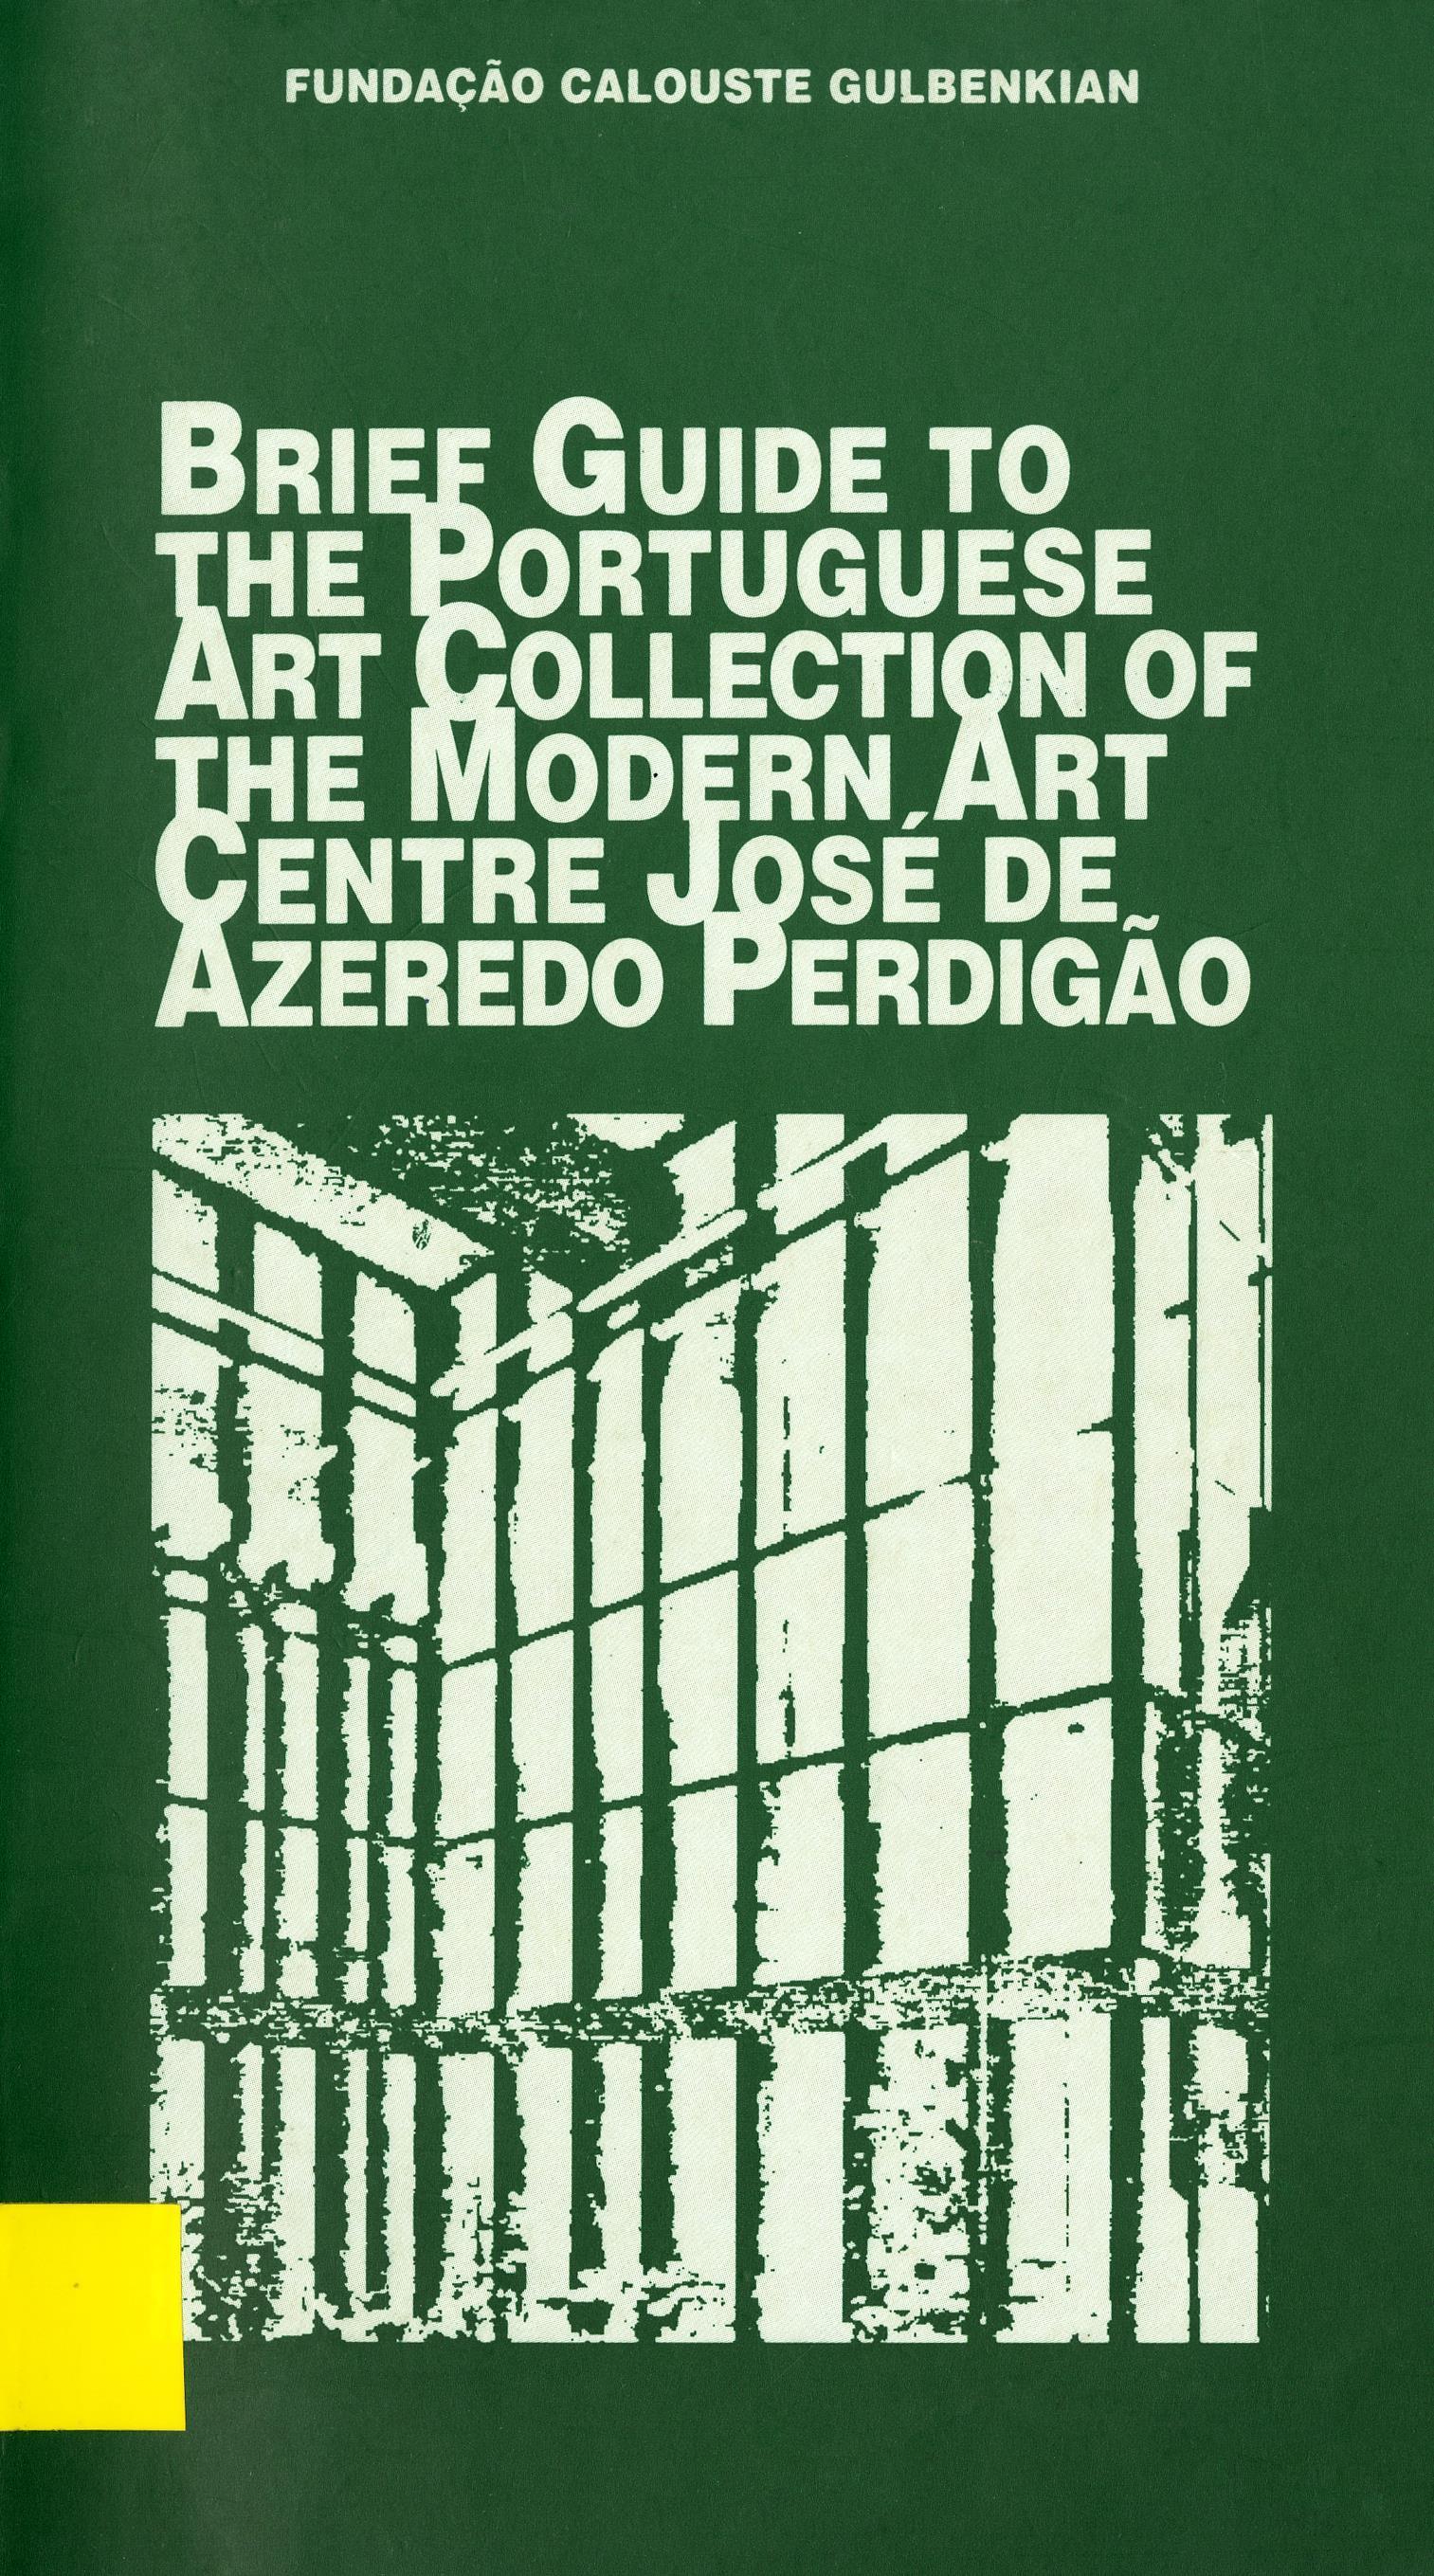 Brief Guide to the Portuguese Art Collection of the Modern Art Centre José de Azeredo Perdigão